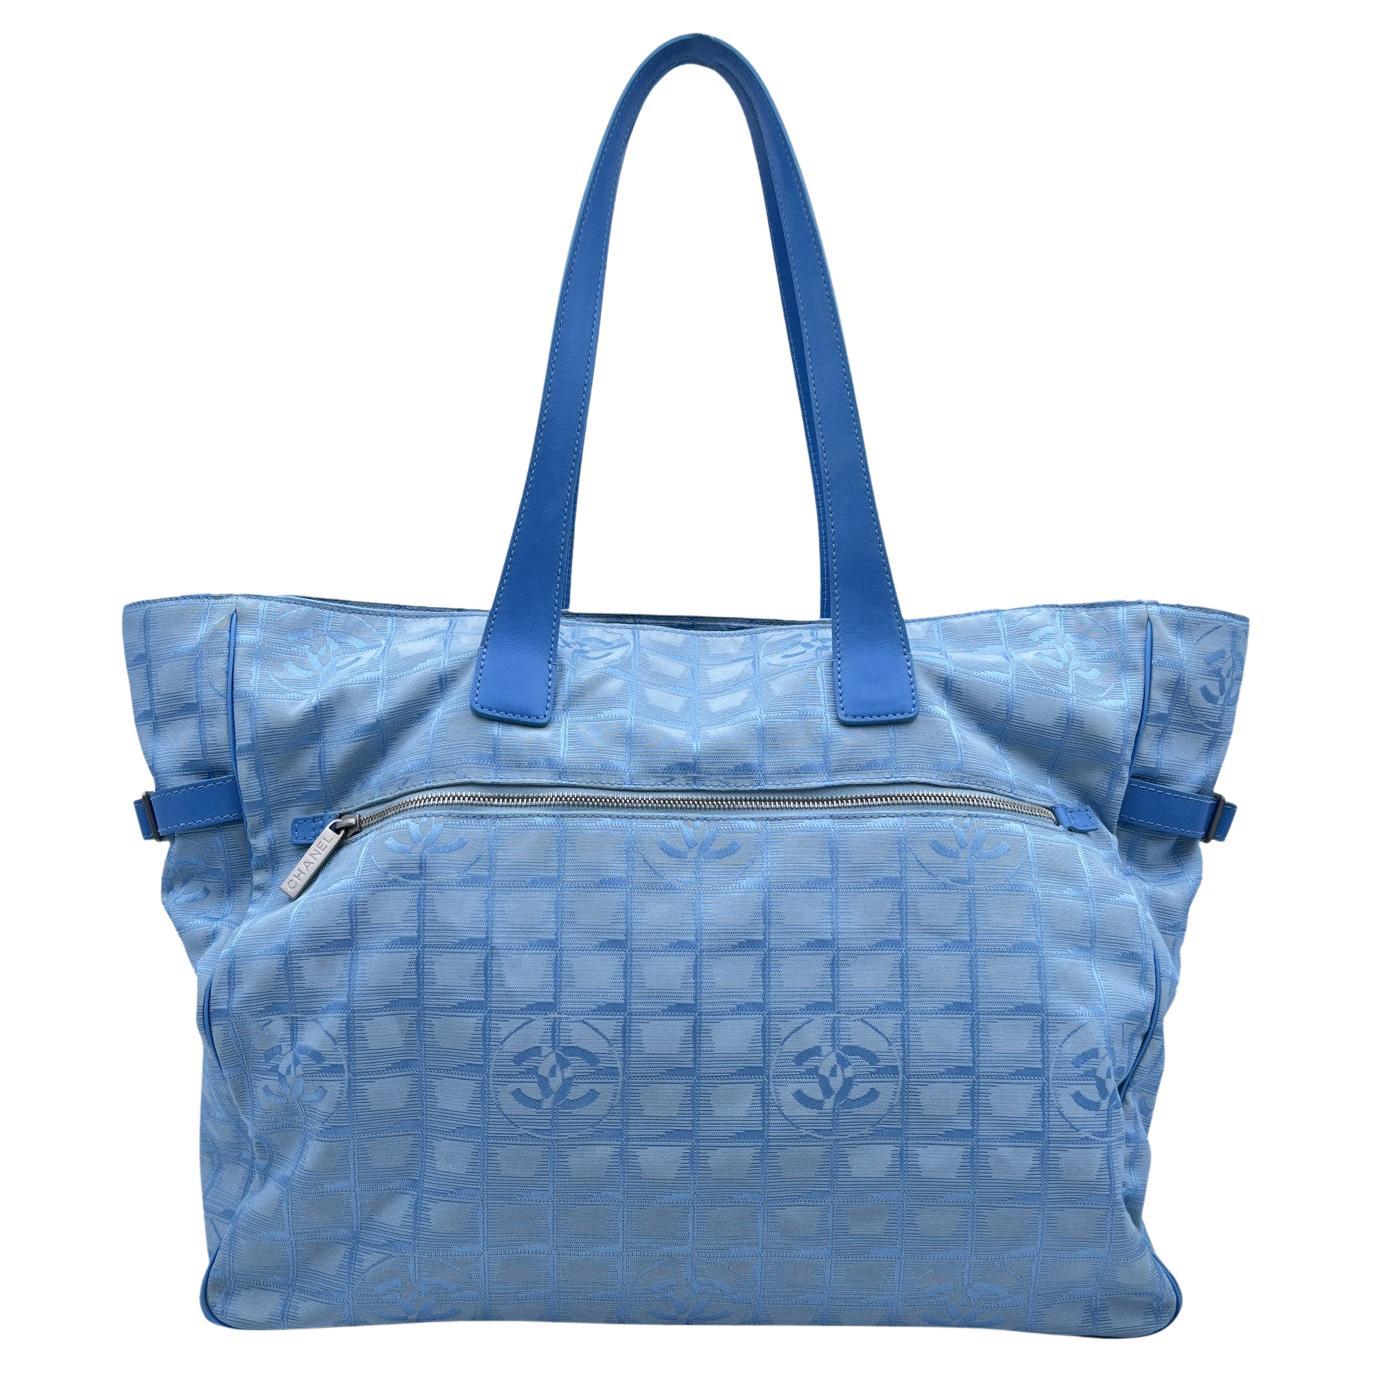 Chanel Light Blue Nylon Canvas New Travel Line Large Tote Bag